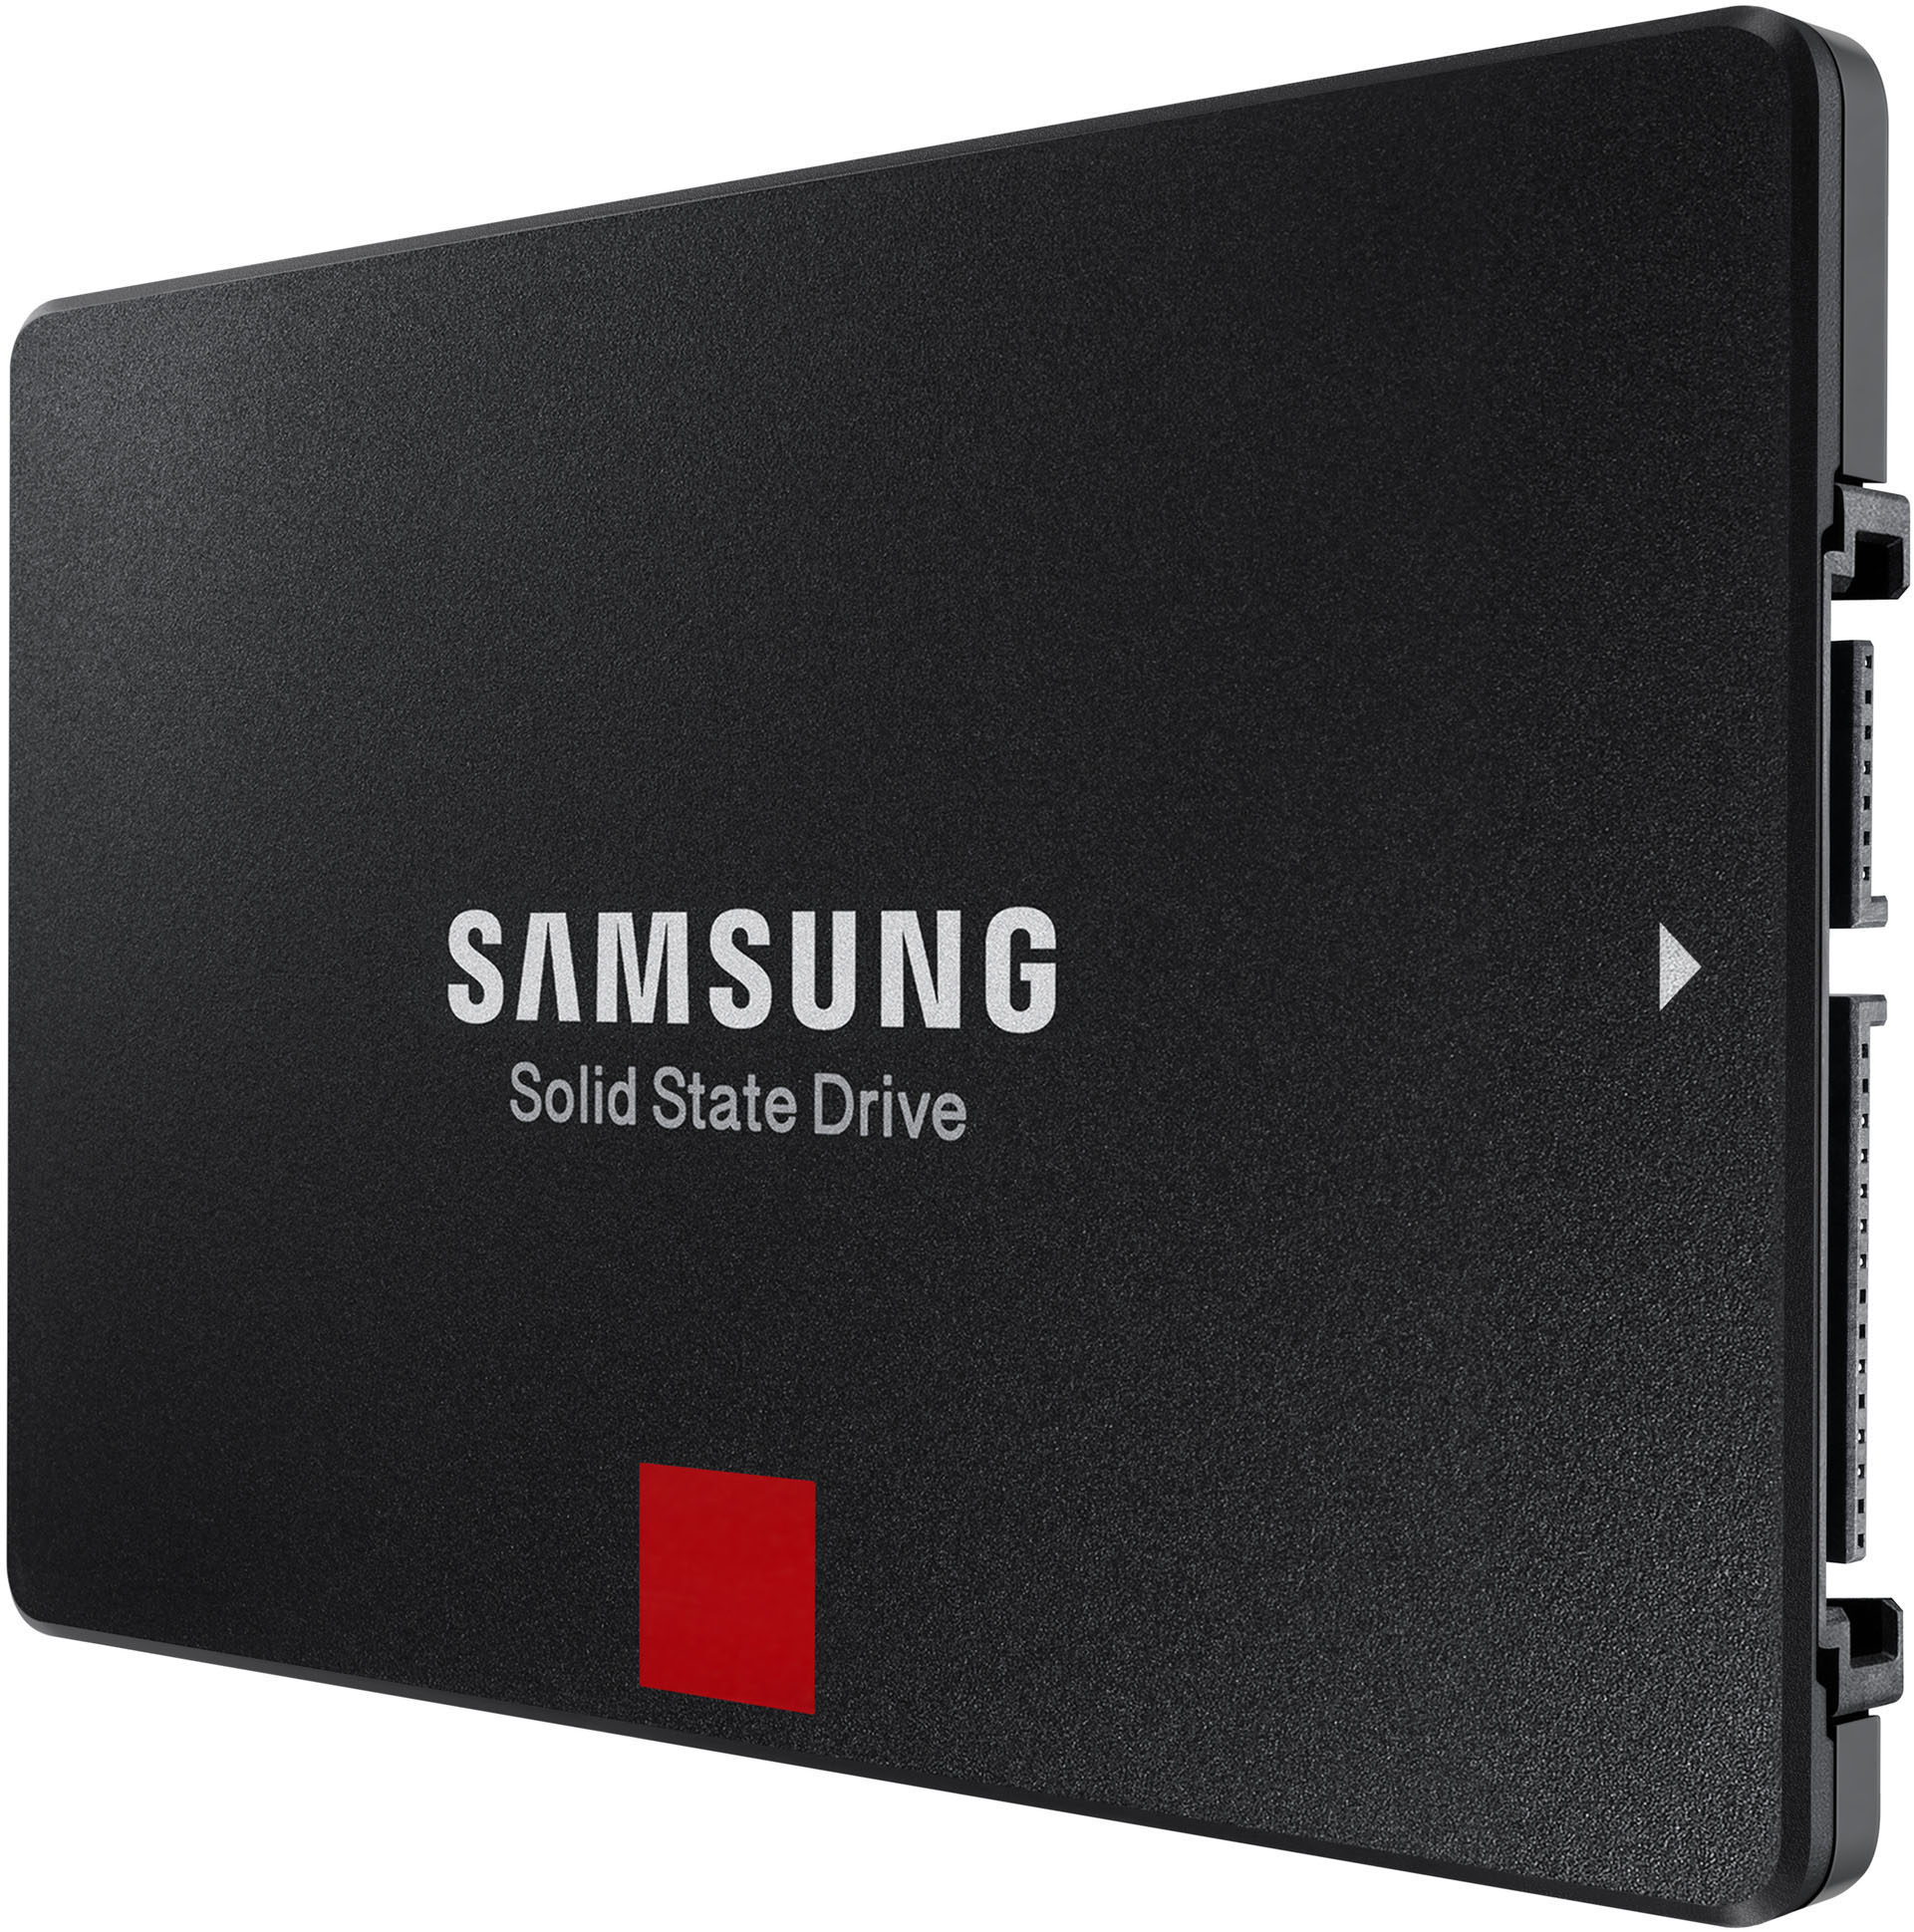 SAMSUNG 860 PRO Festplatte 4 Retail, SSD SATA TB Gbps, 6 2,5 Zoll, intern